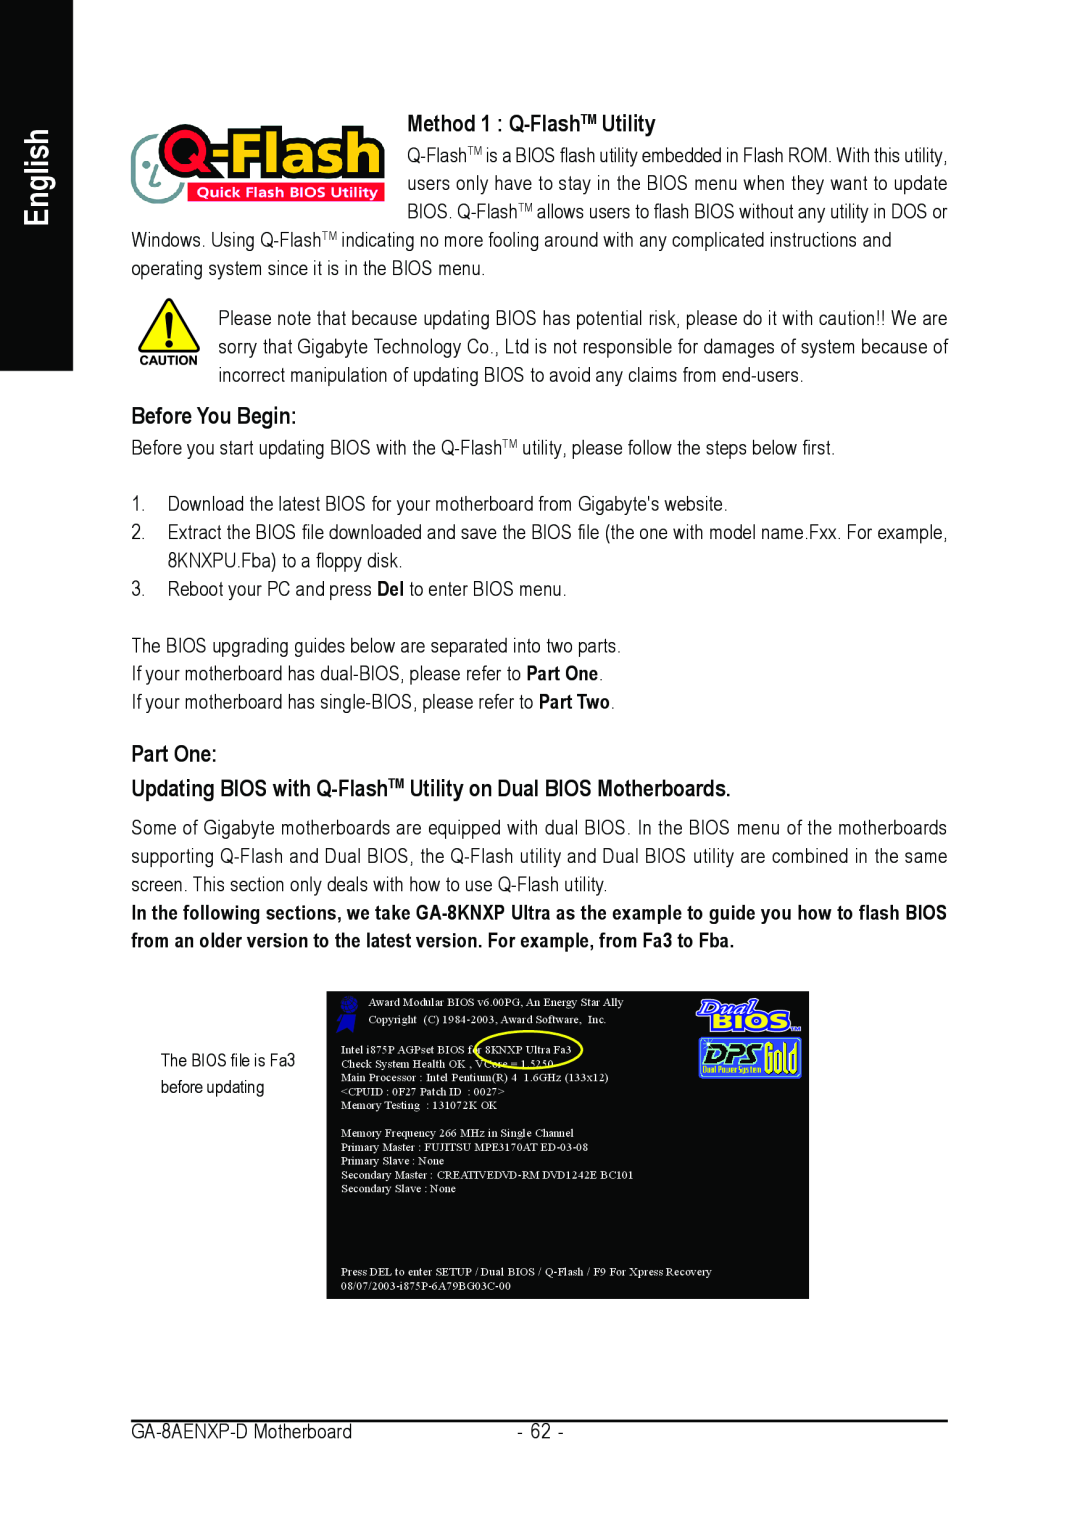 Gigabyte GA-8AENXP-D user manual Method 1 Q-FlashTM Utility, Before You Begin, Part One, English 